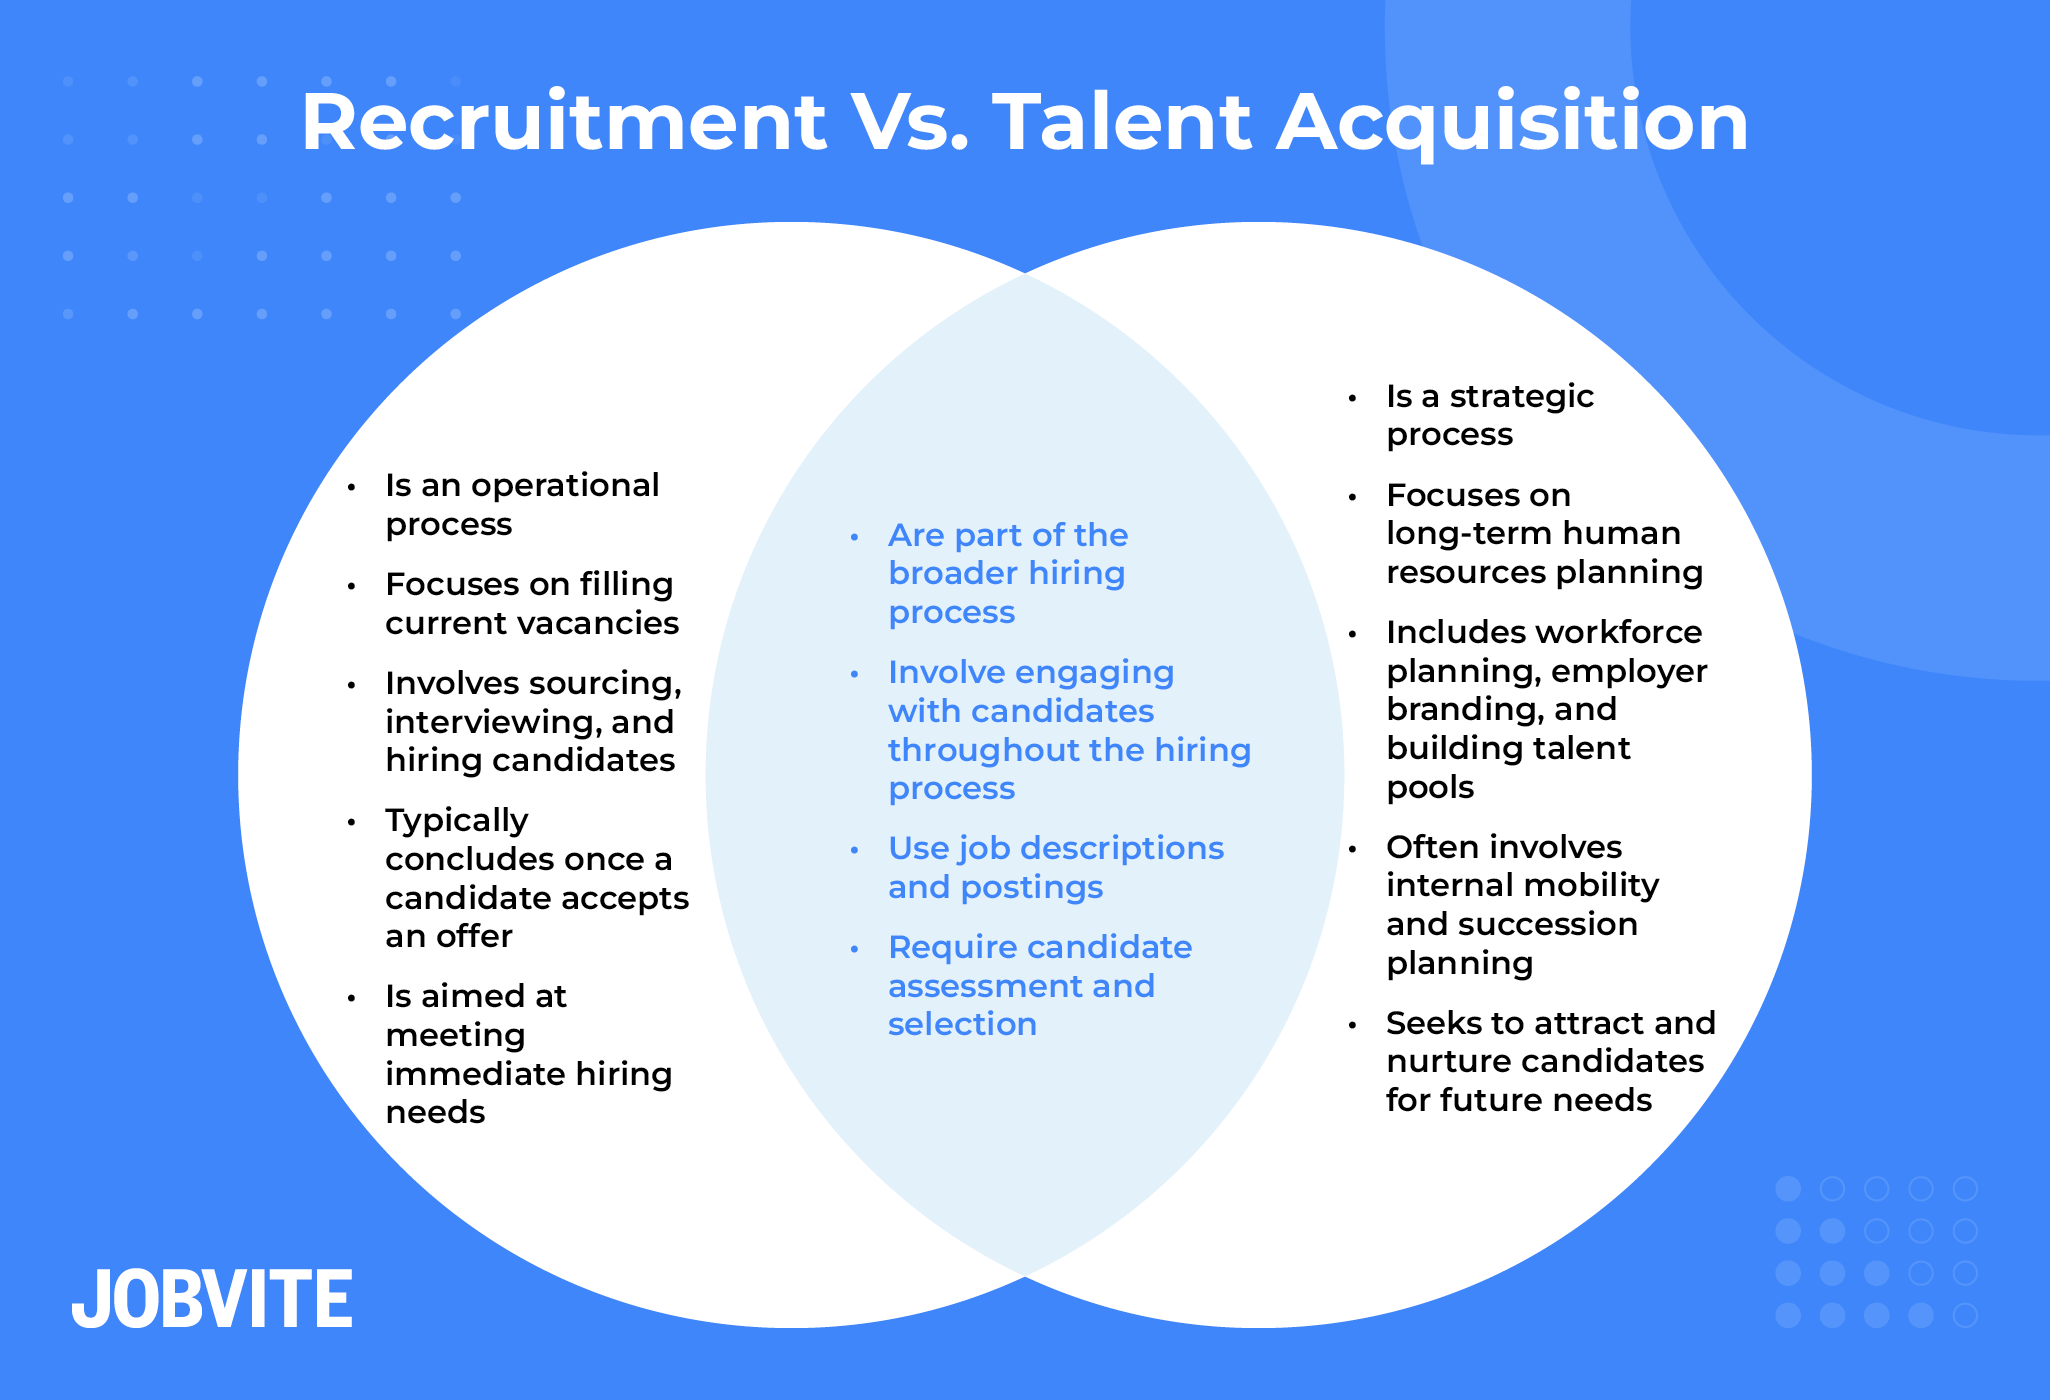 A Venn diagram comparing recruitment and talent acquisition (as described below).